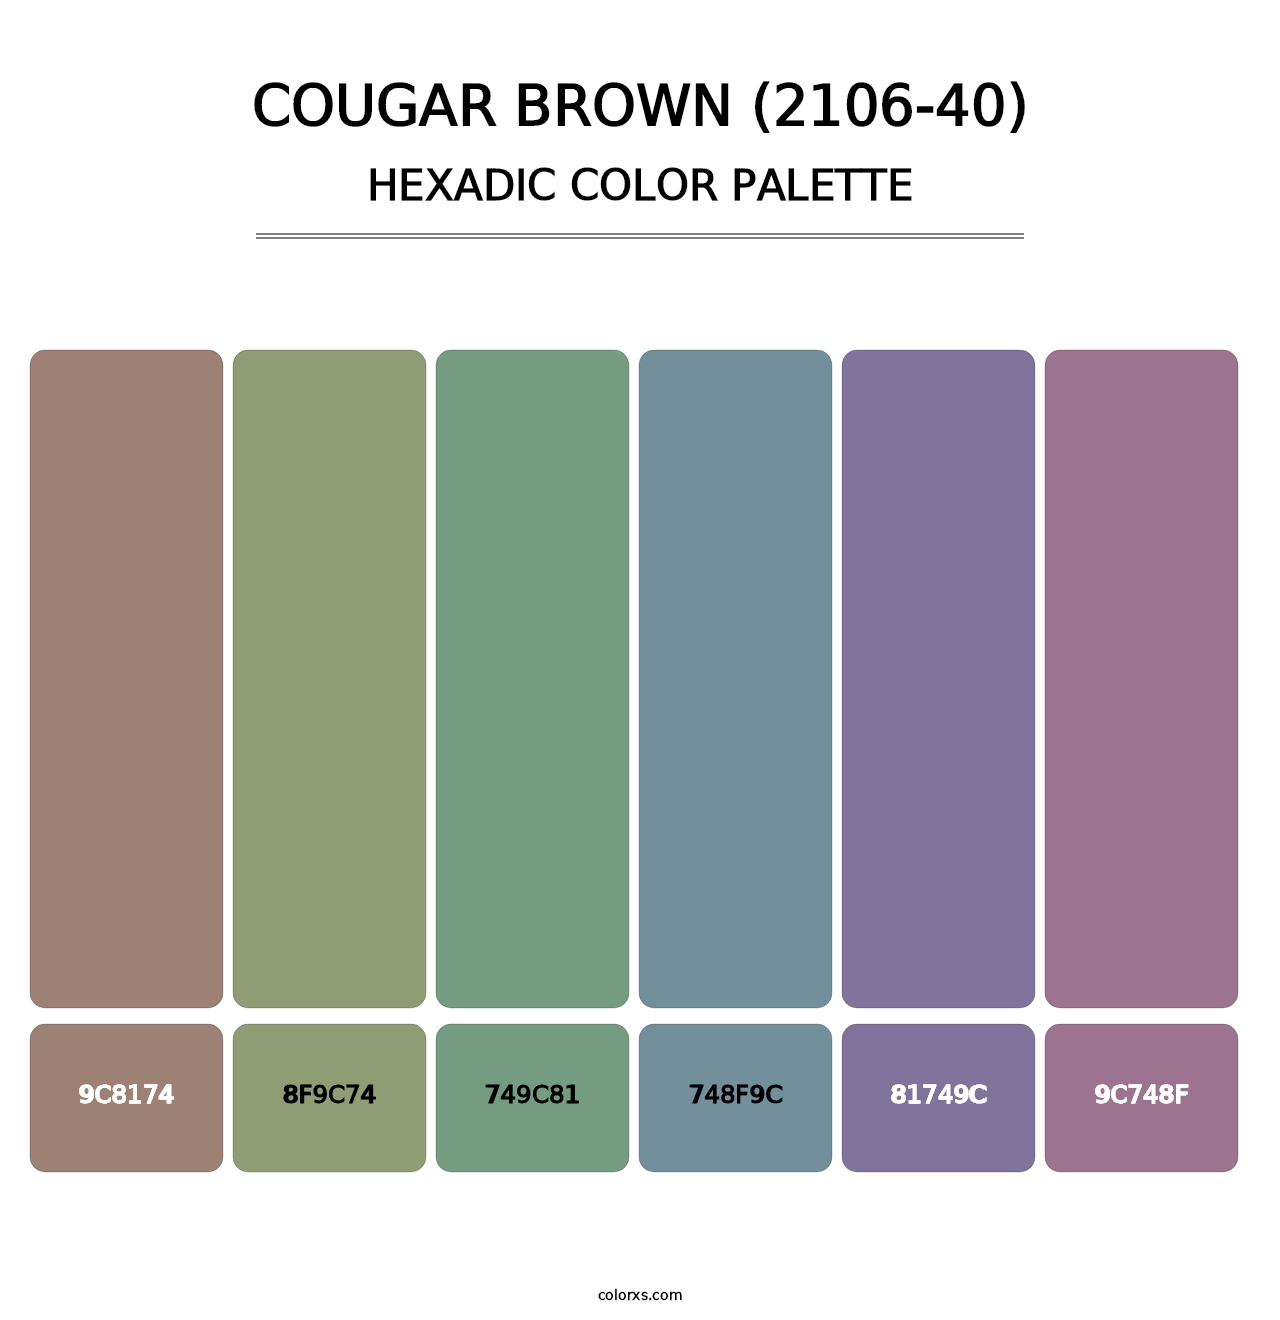 Cougar Brown (2106-40) - Hexadic Color Palette